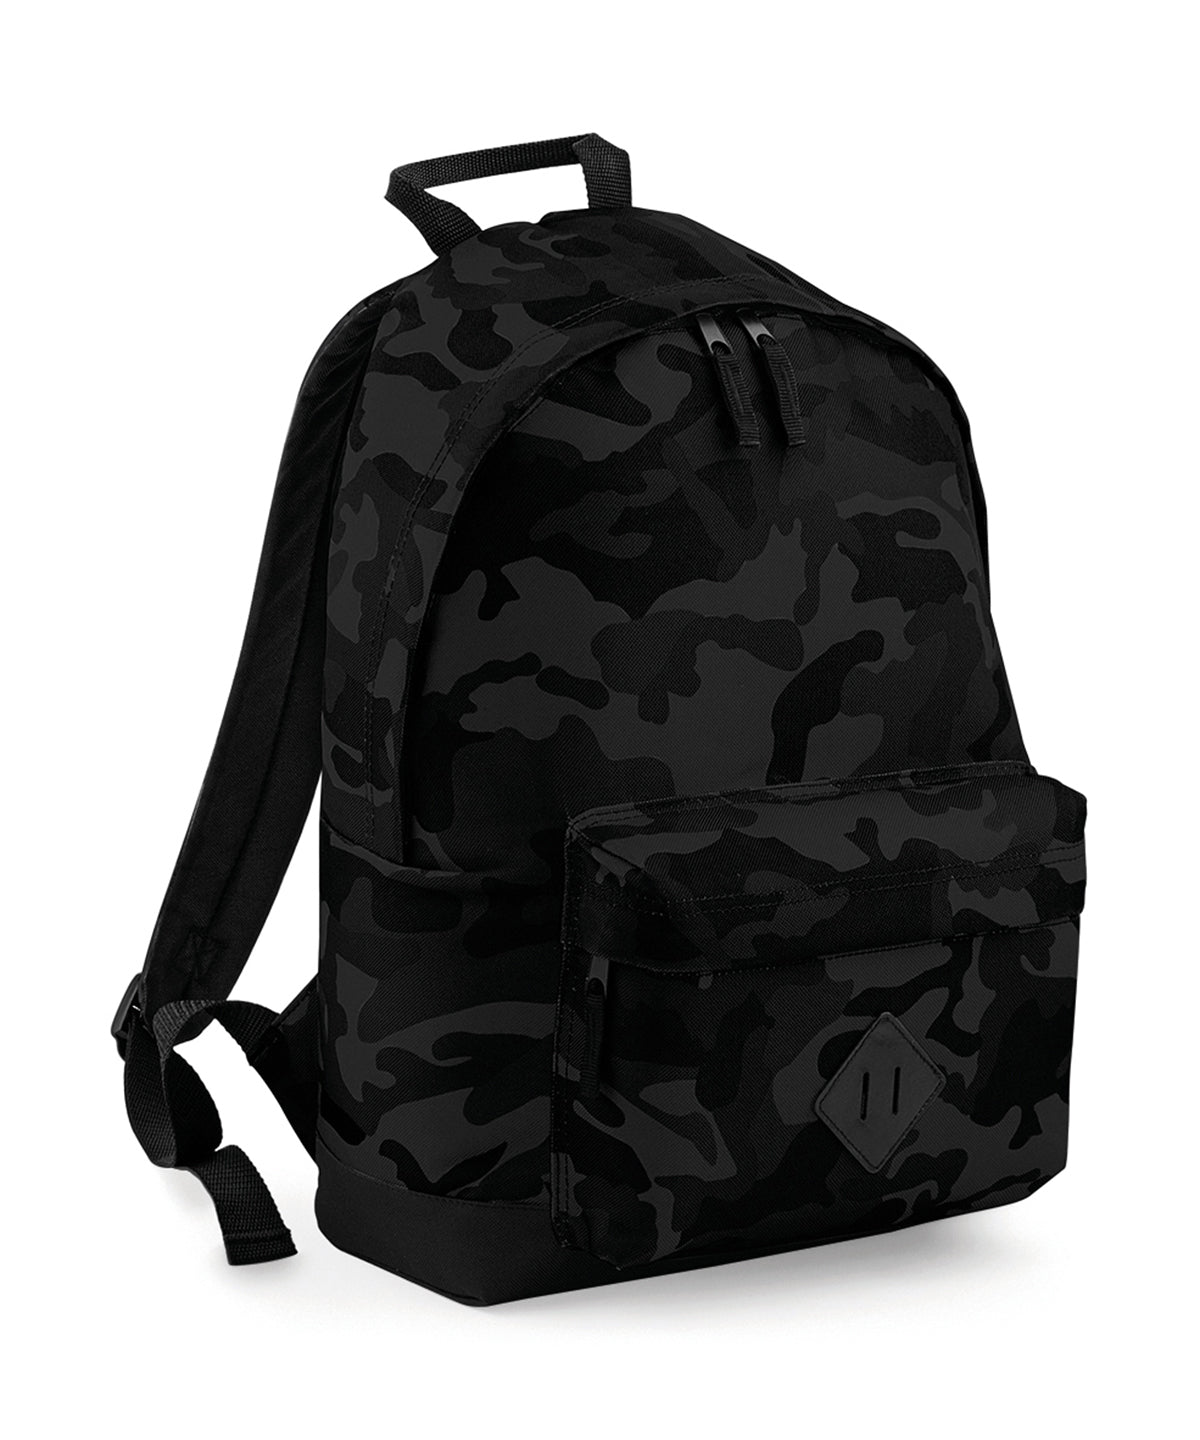 Personalised Bags - Black Bagbase Camo backpack